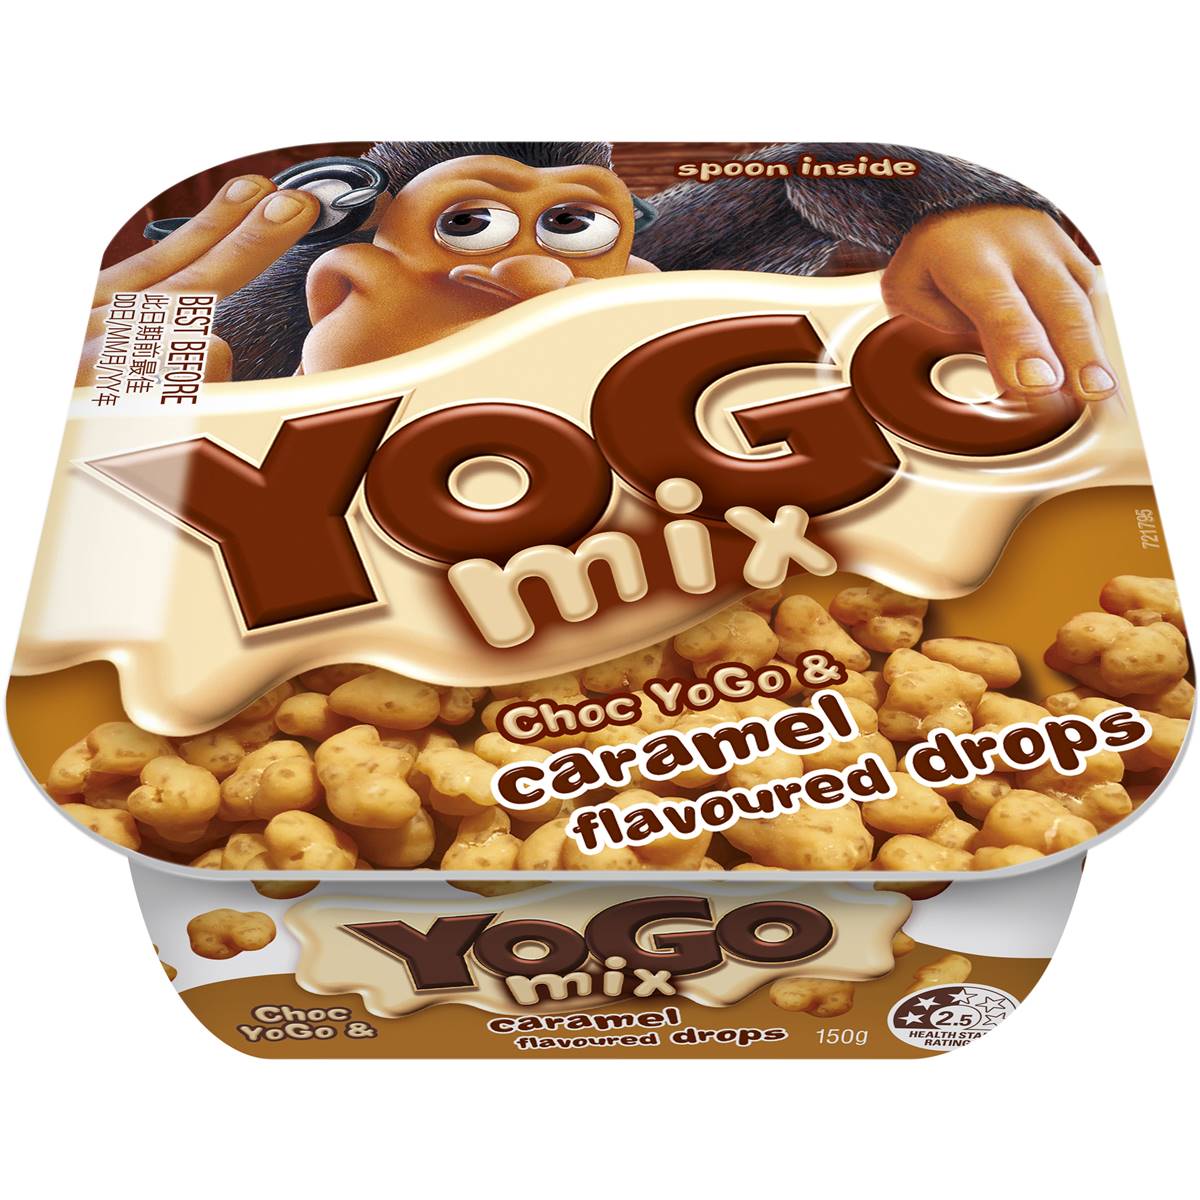 Calories in Yogo Choc Yogo & Caramel Flavoured Drops